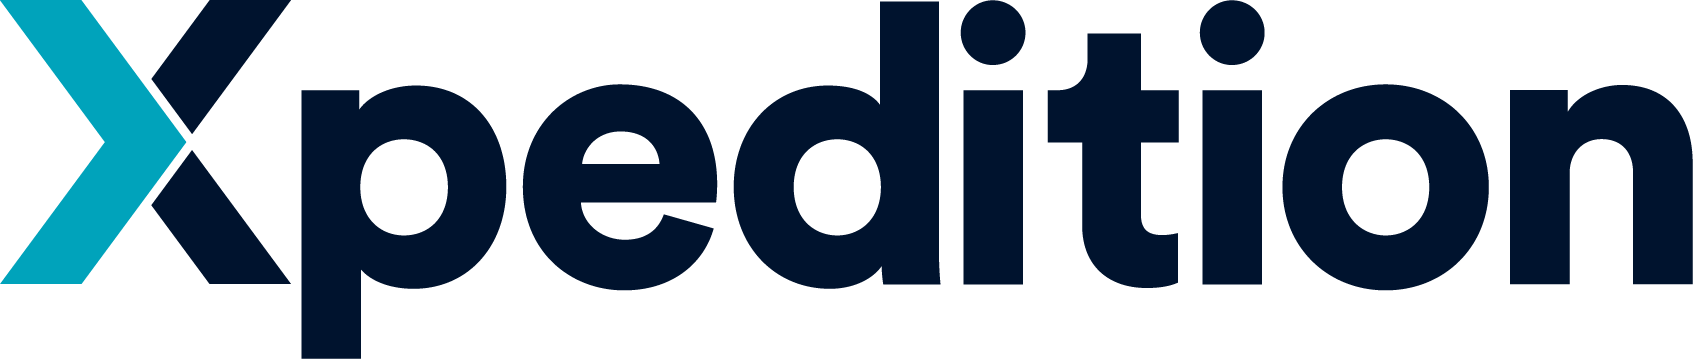 Xpedition Logo